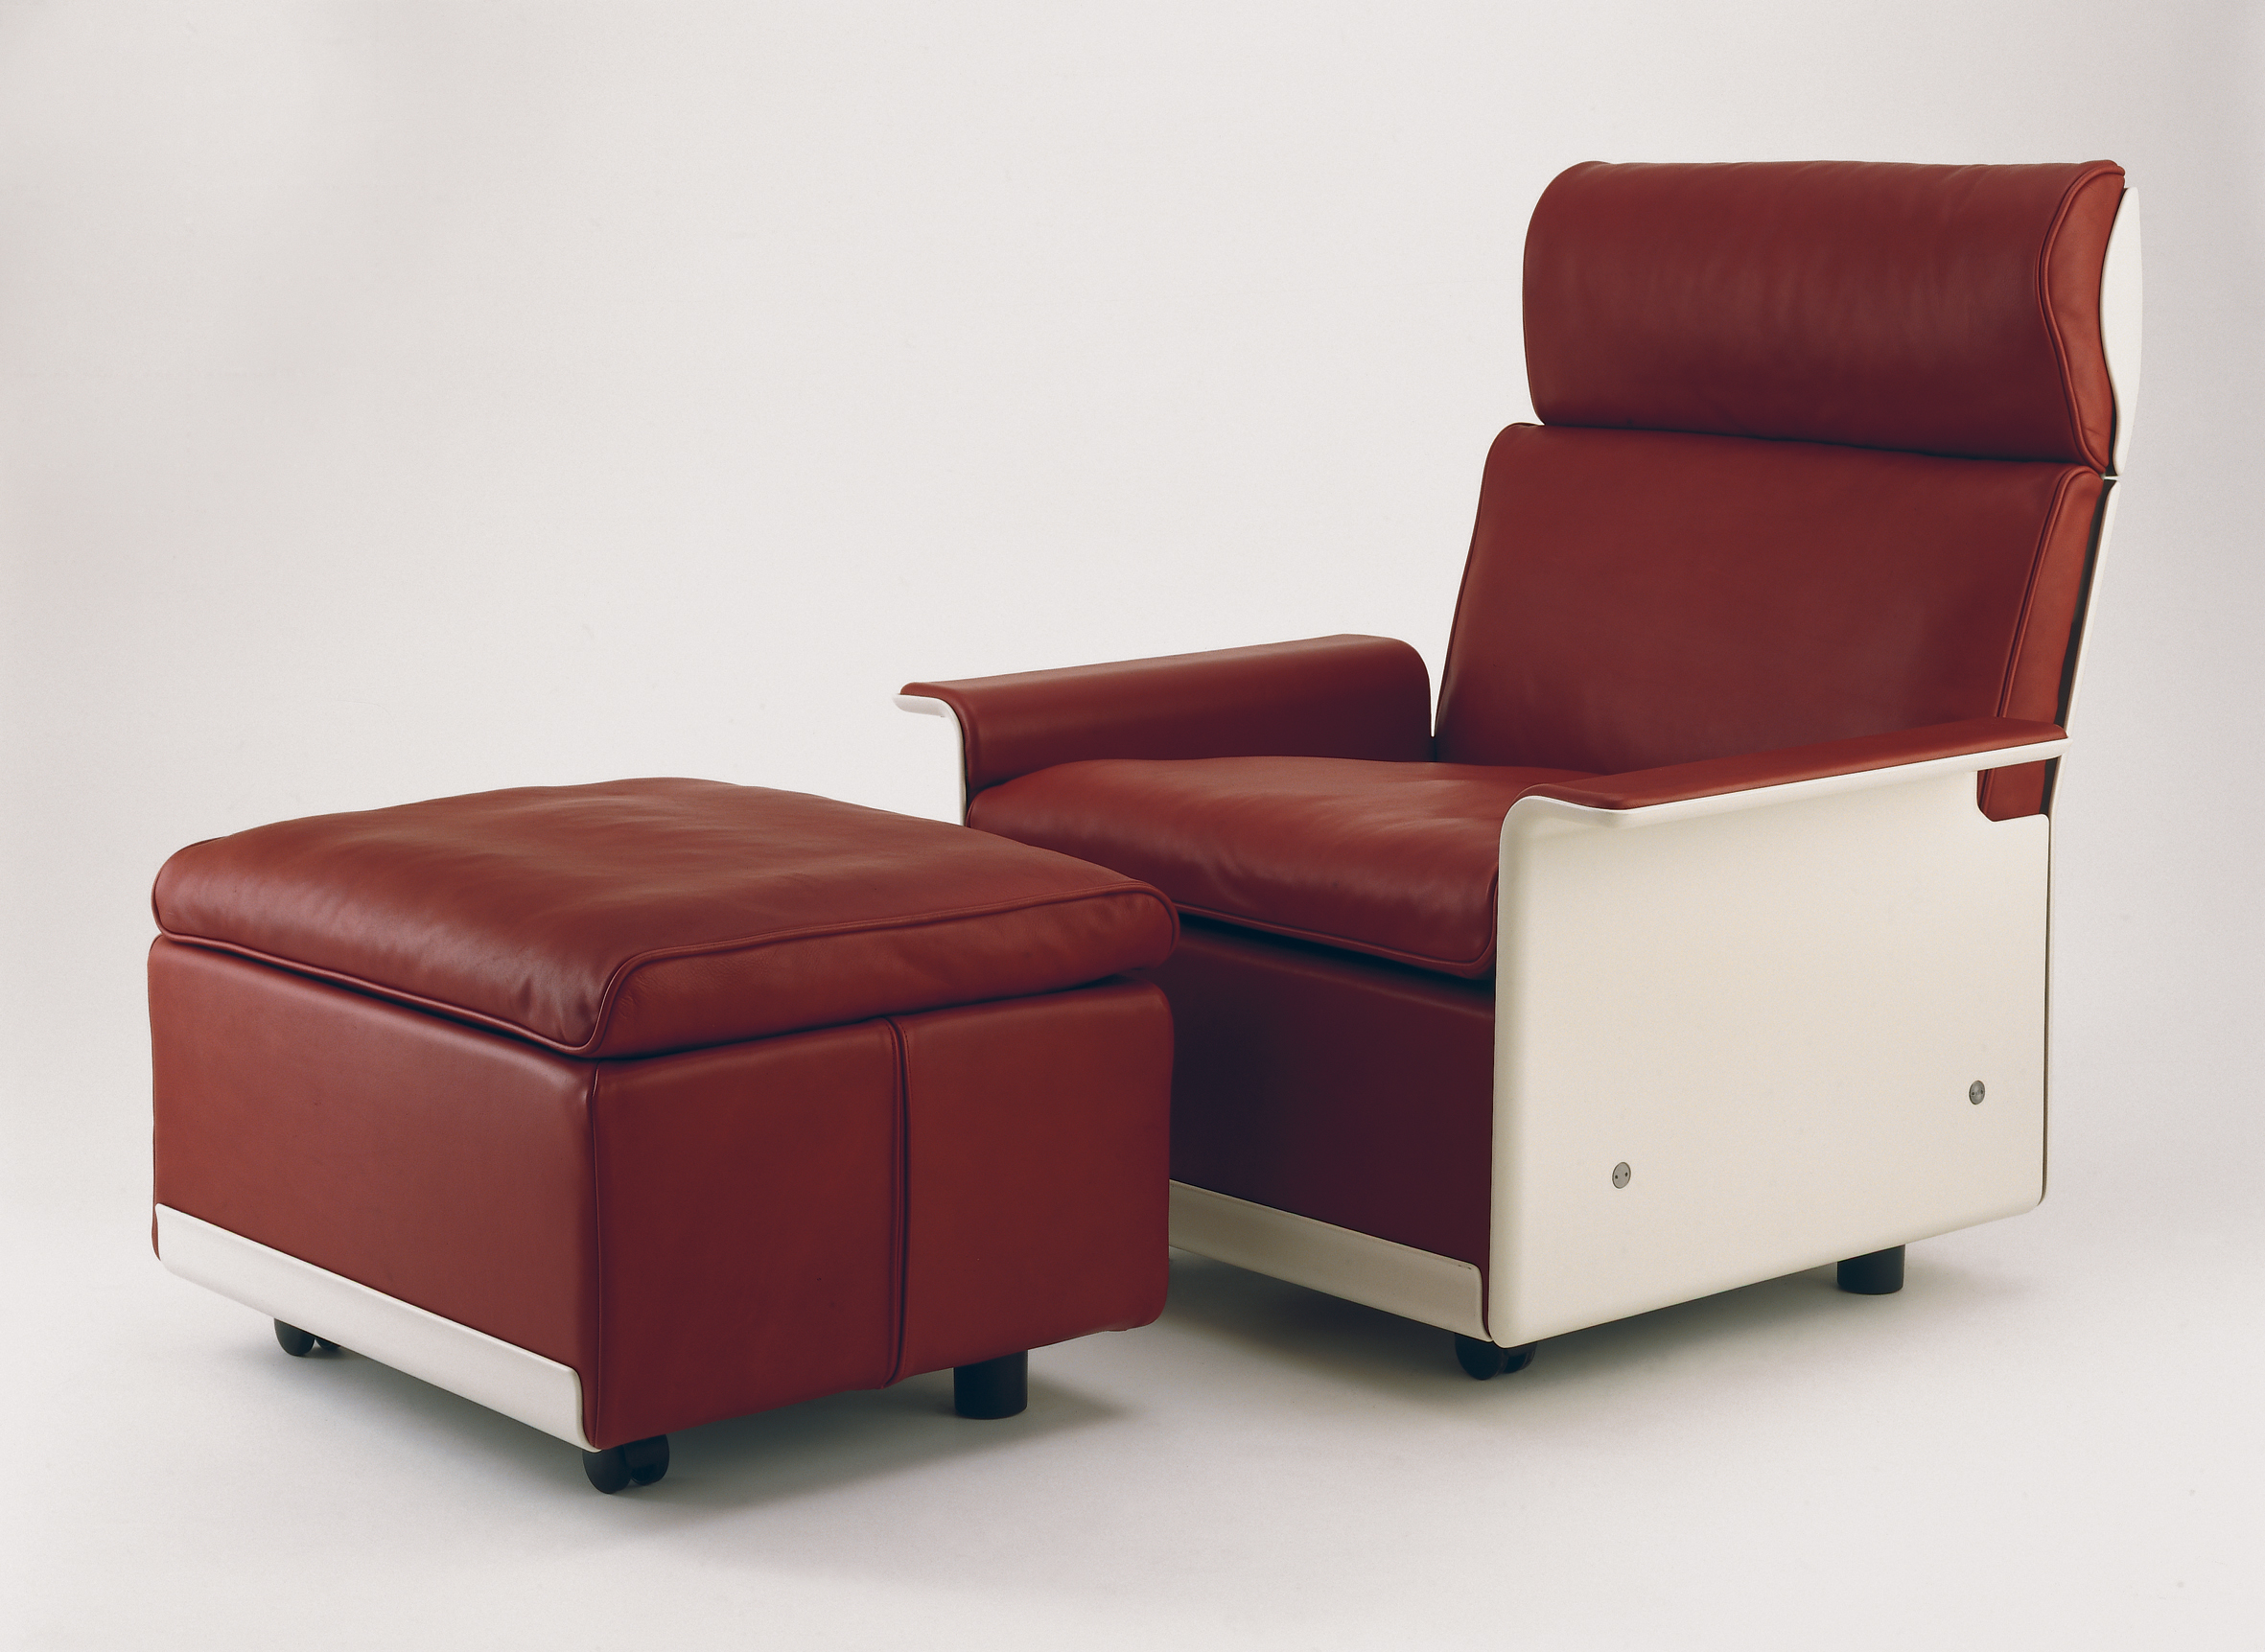 Dieter Rams Reissues His Rare (But Classic) Modular Chair